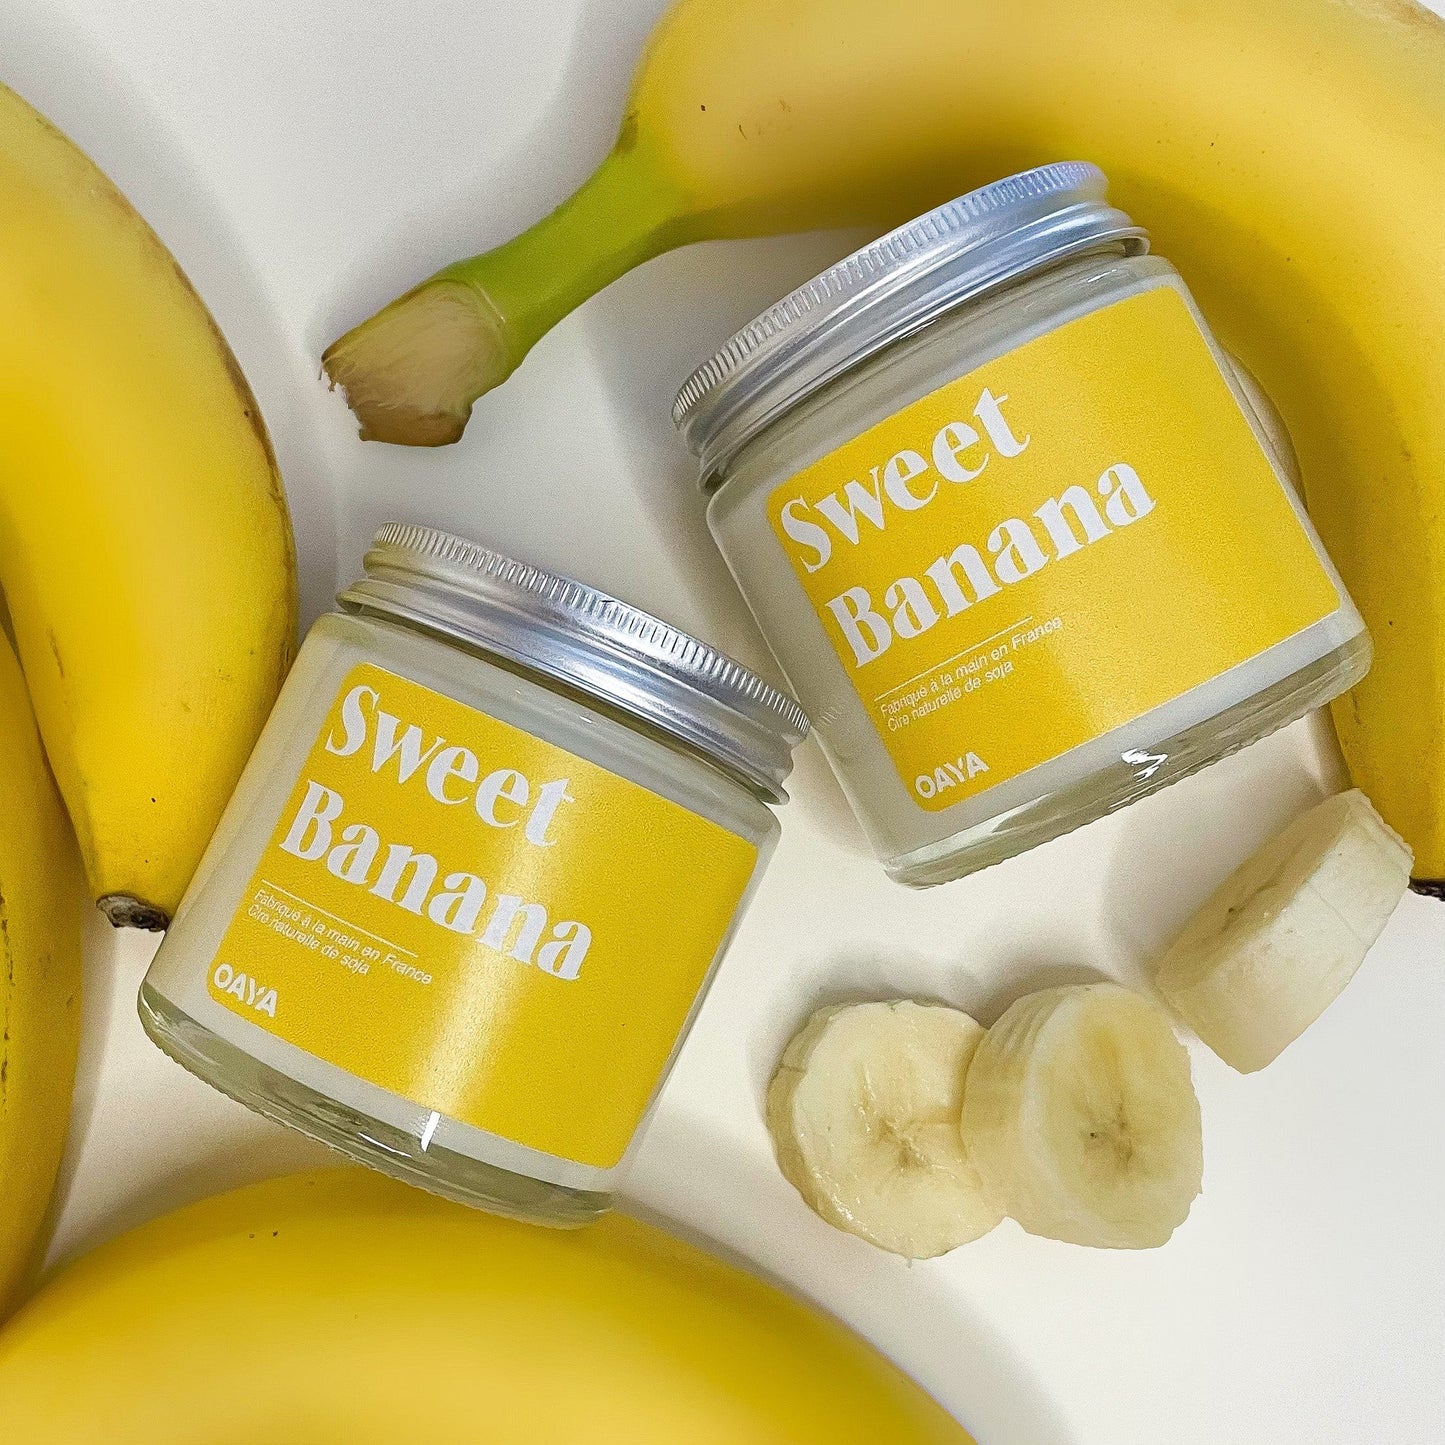 Sweet Banana Candle | Banana